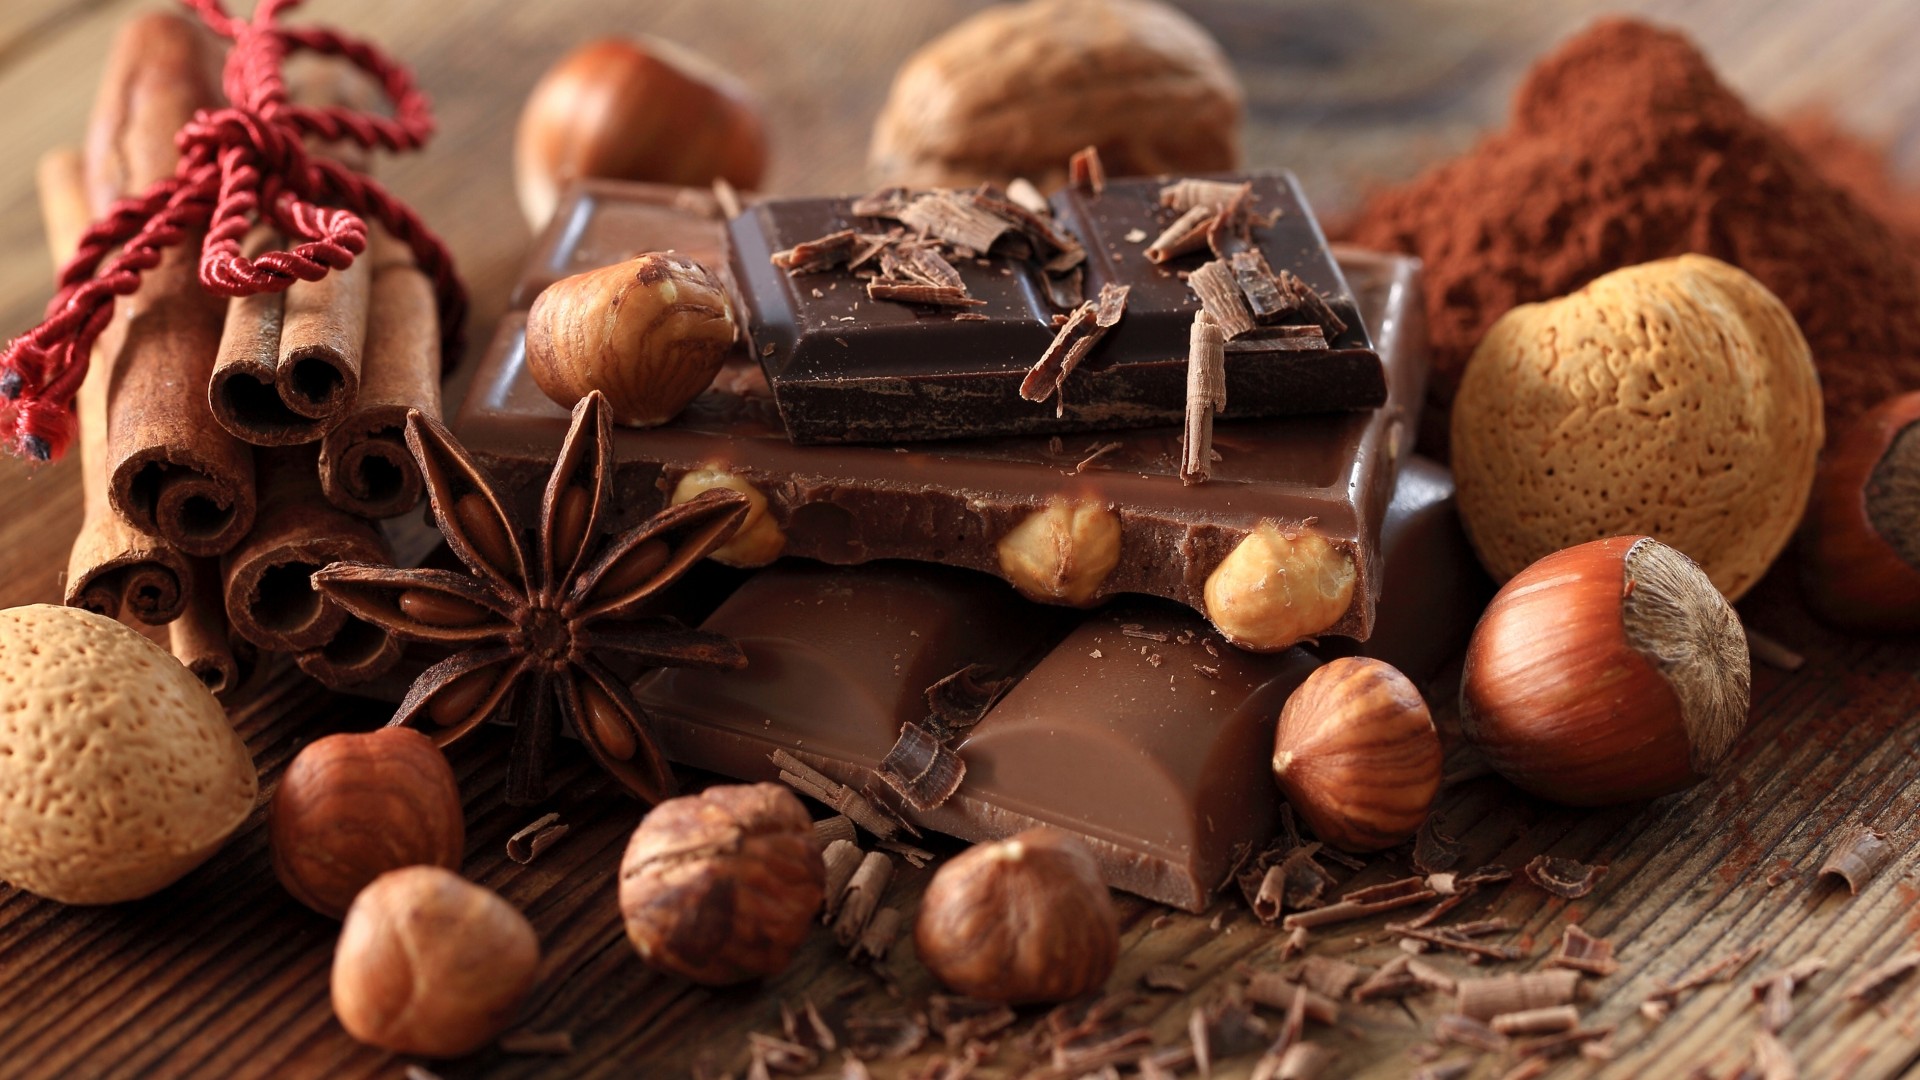 Chocolate-chocolate-35500724-1920-1080